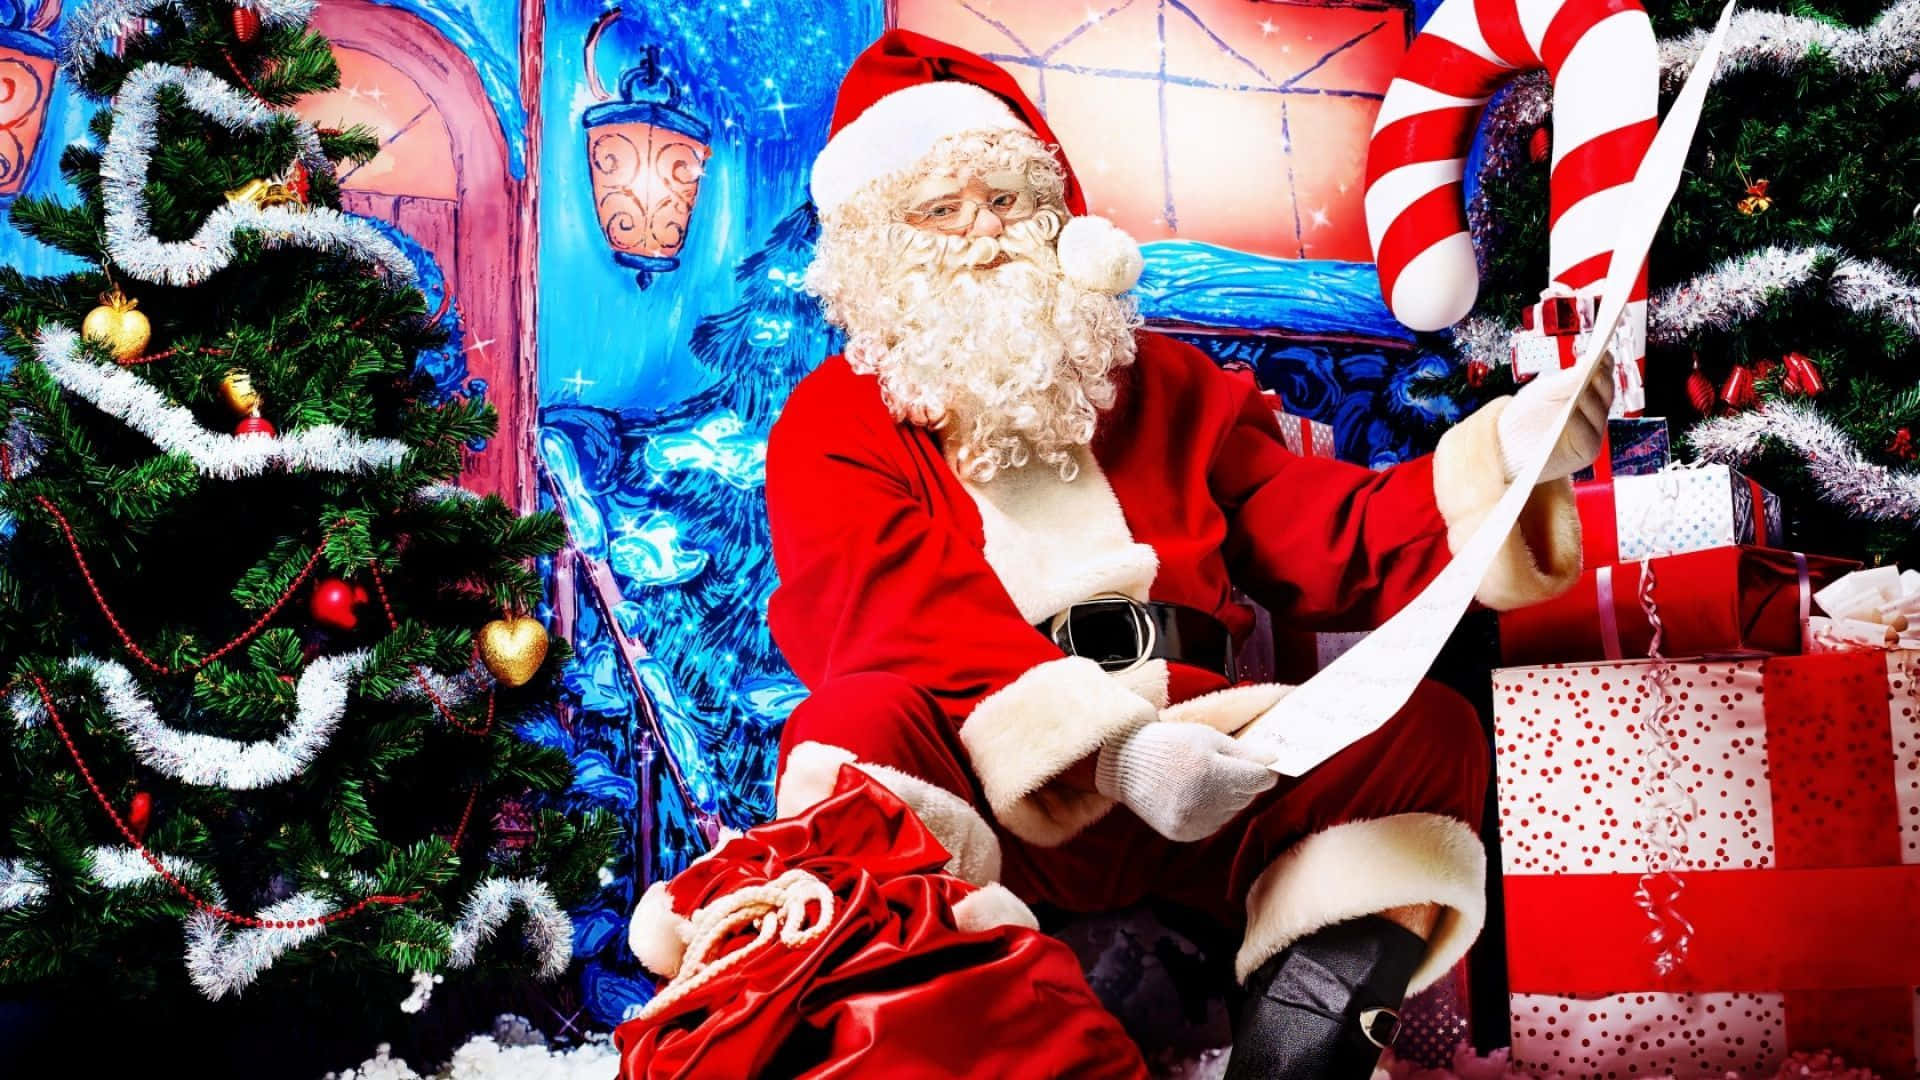 Santa getting ready for Christmas - HD Image Wallpaper